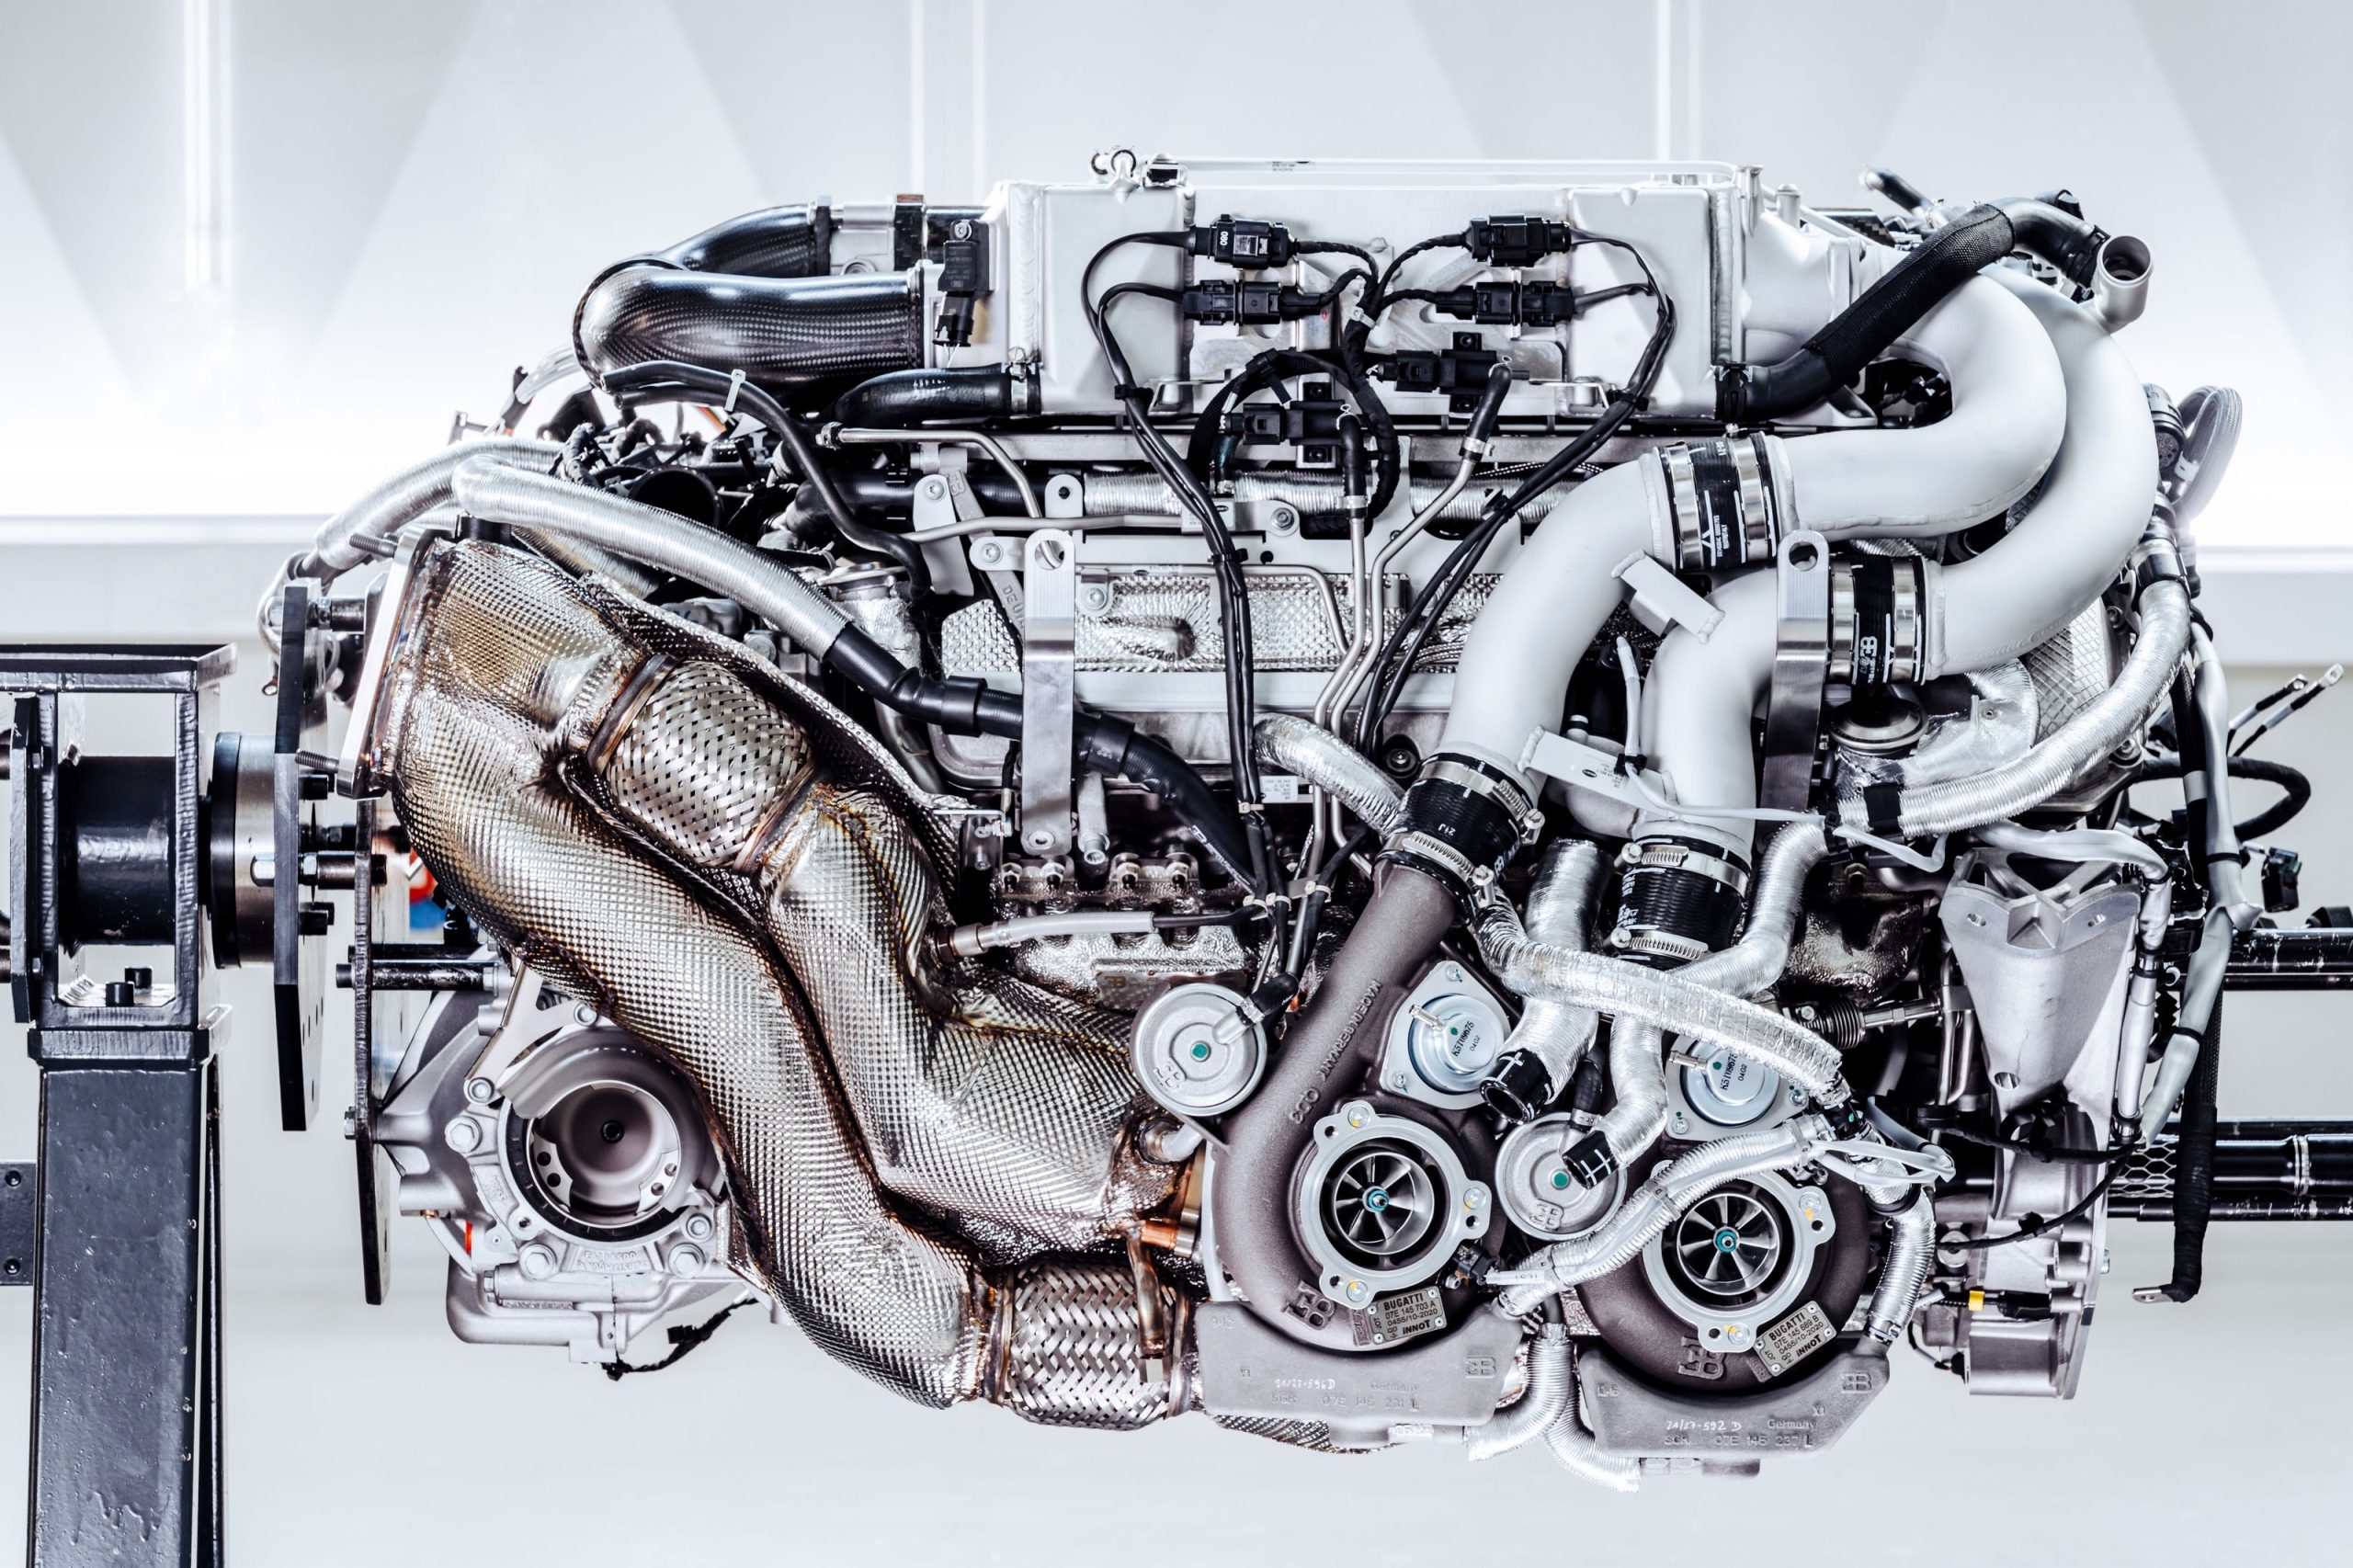 Mate Rimac Reveals Bugatti W16 Engine Components and Validates Elon Musk's 0-60 mph Assertion